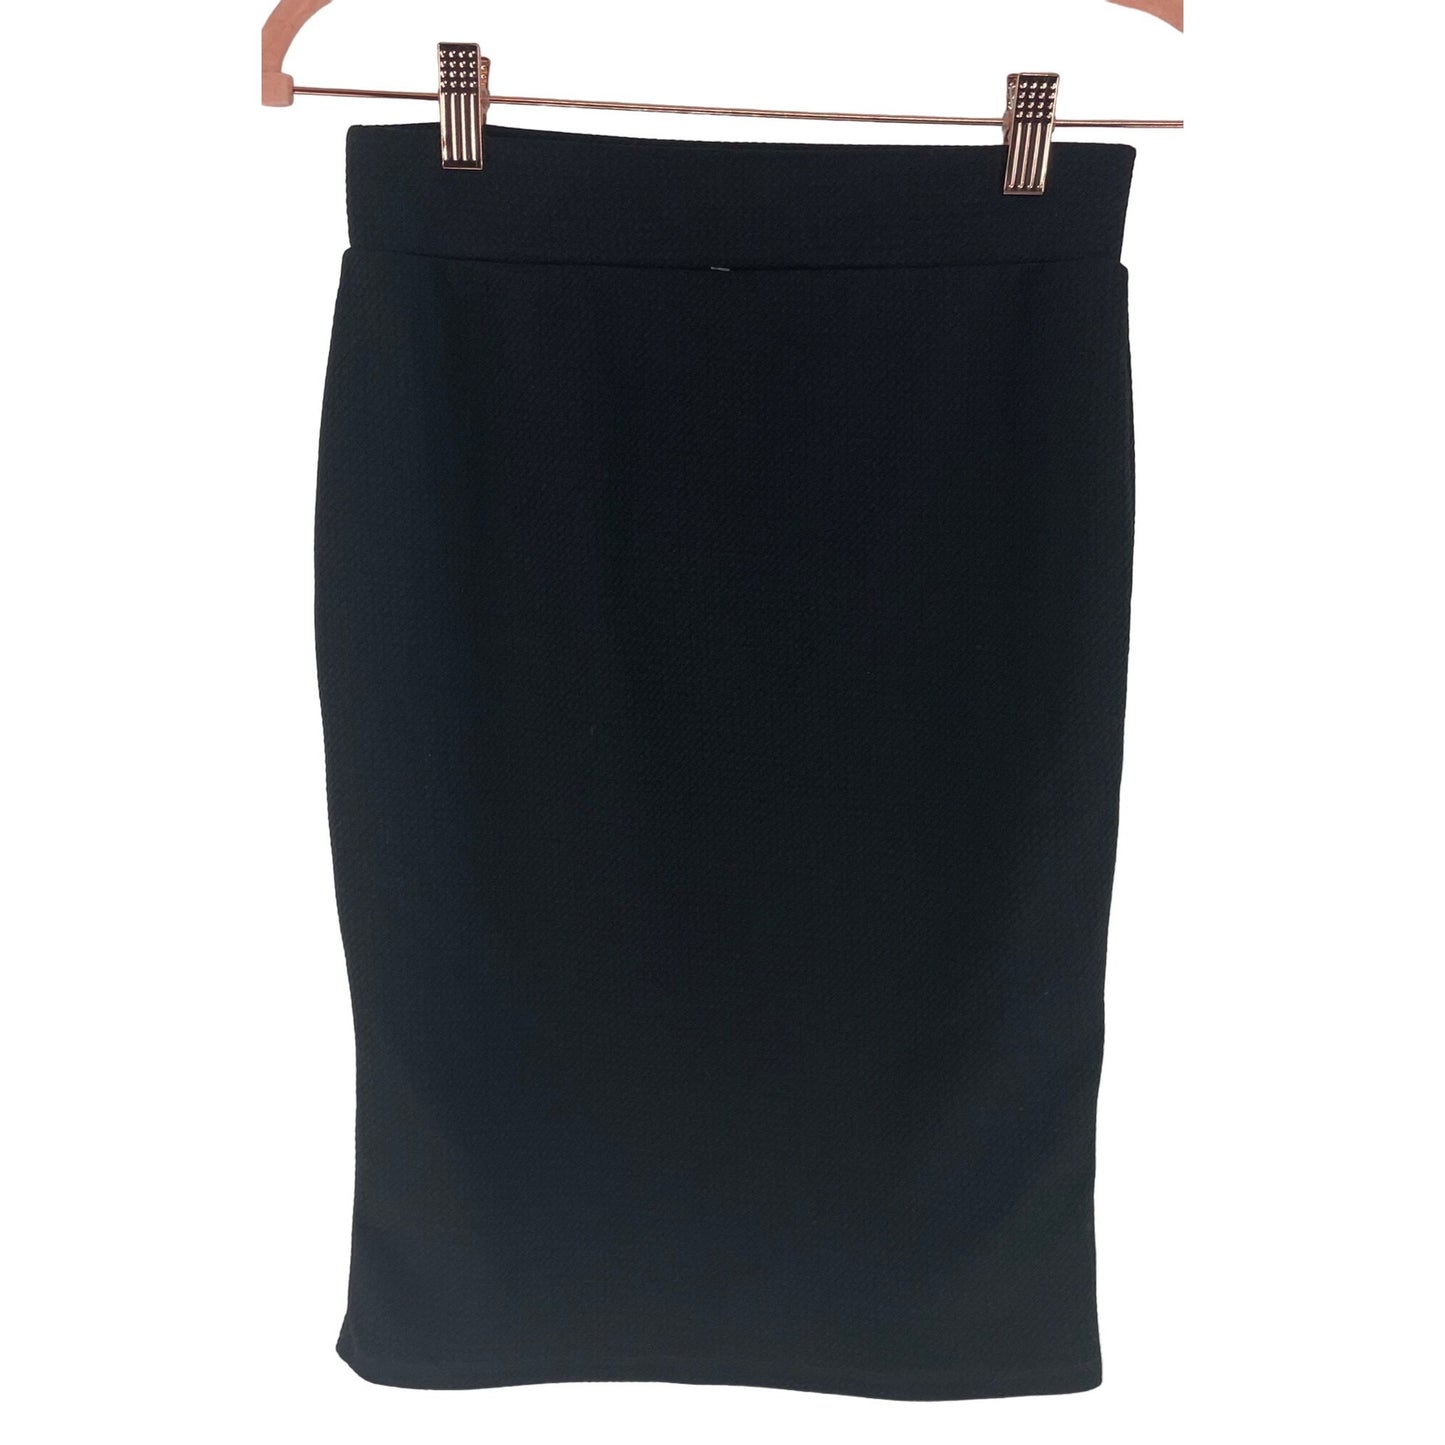 Intro Women's Size Medium Black & White Stretchy Floral Pencil Skirt